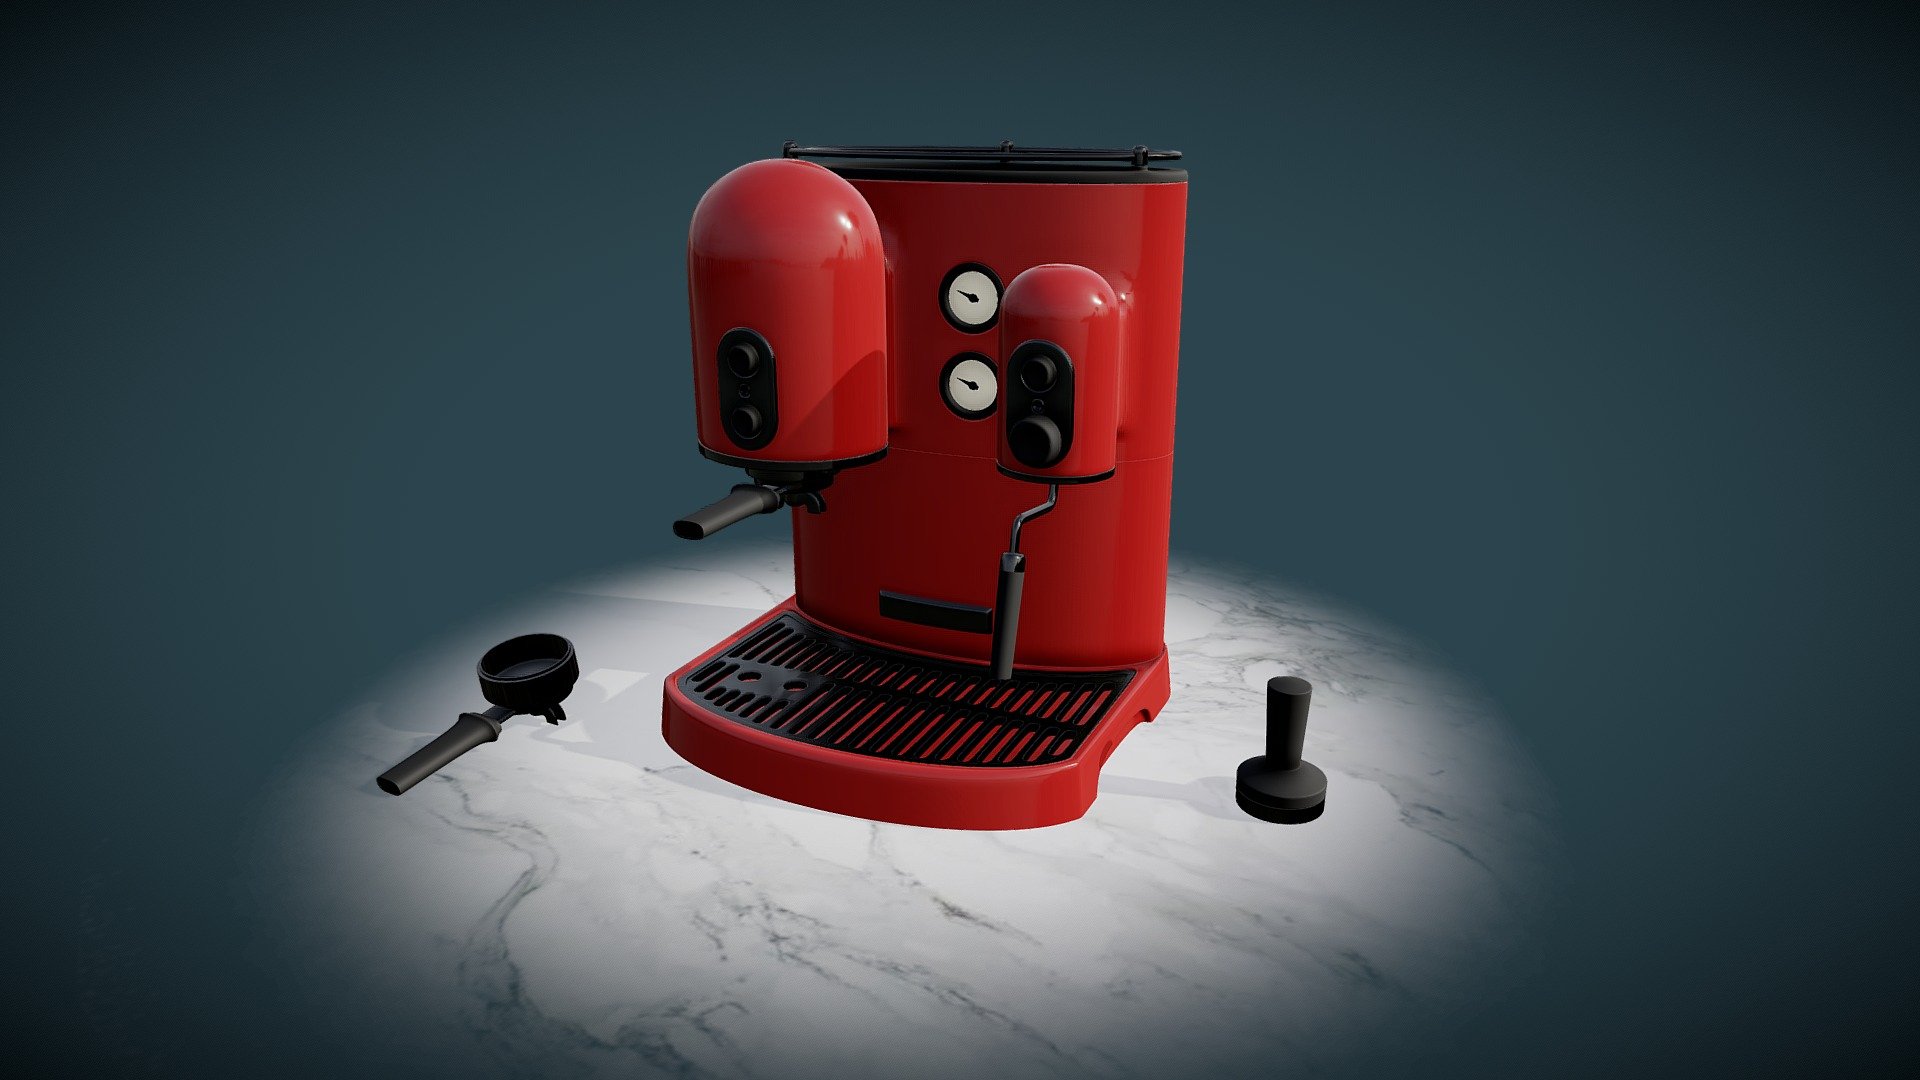 KitchenAid Artisan Coffee Machine, Red